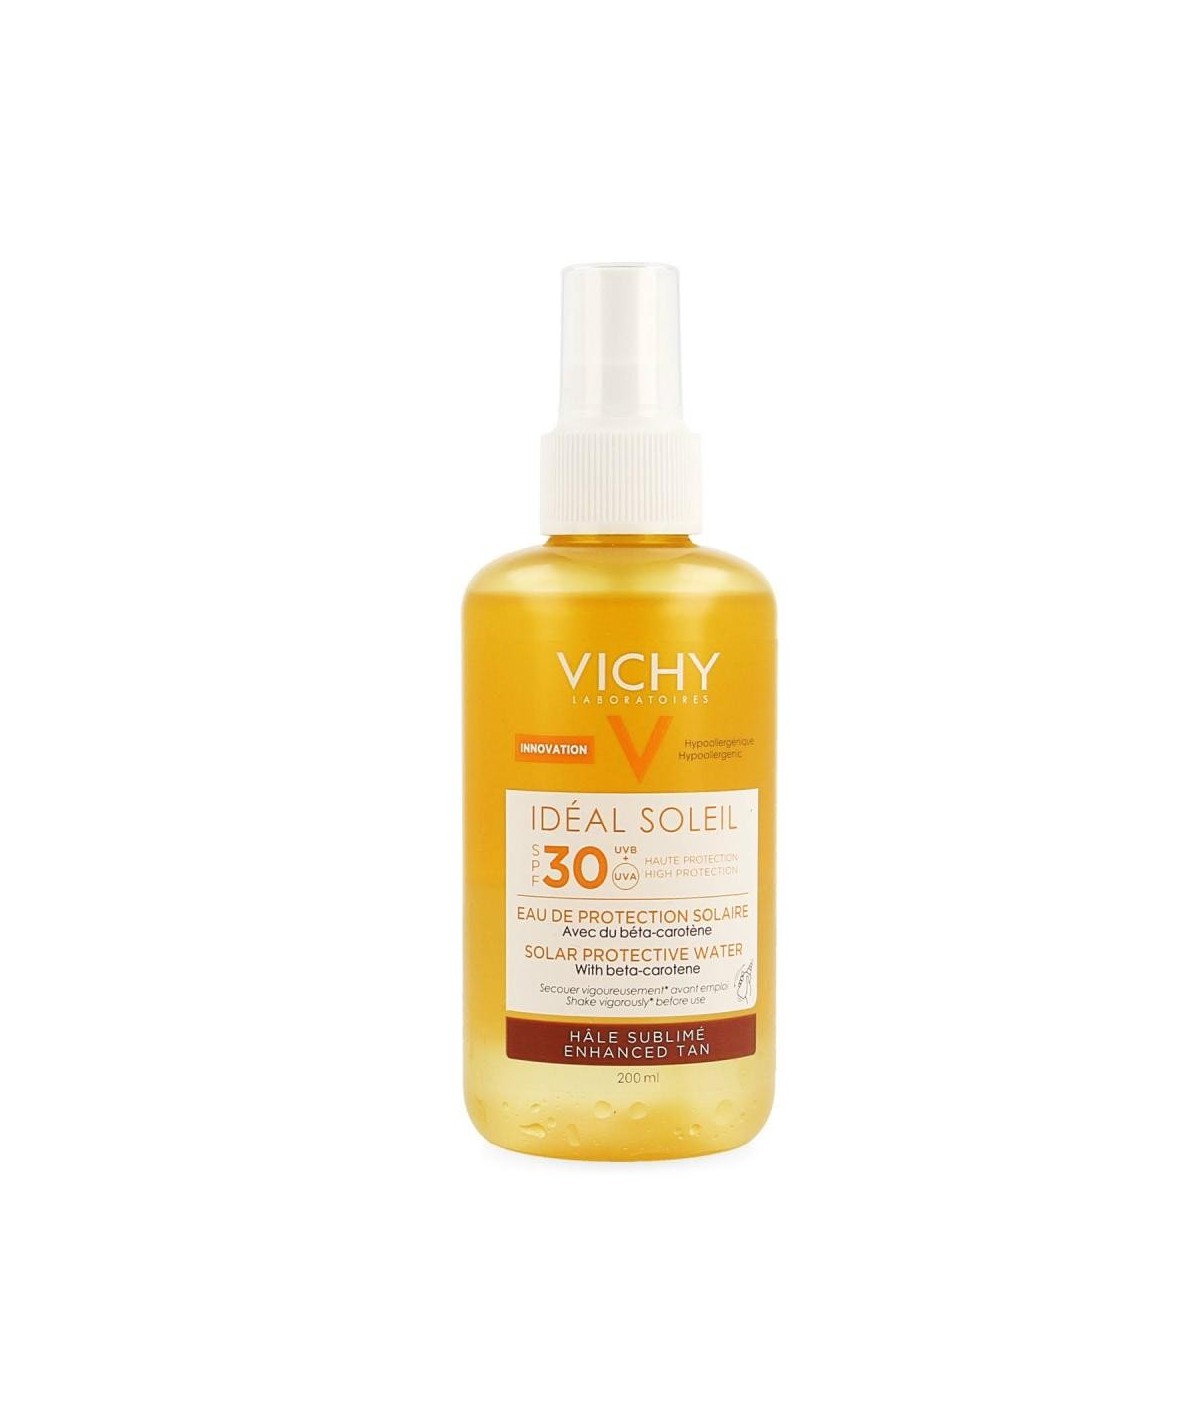 Vichy Ideal Soleil SPF30 agua Luminosidad 200ml